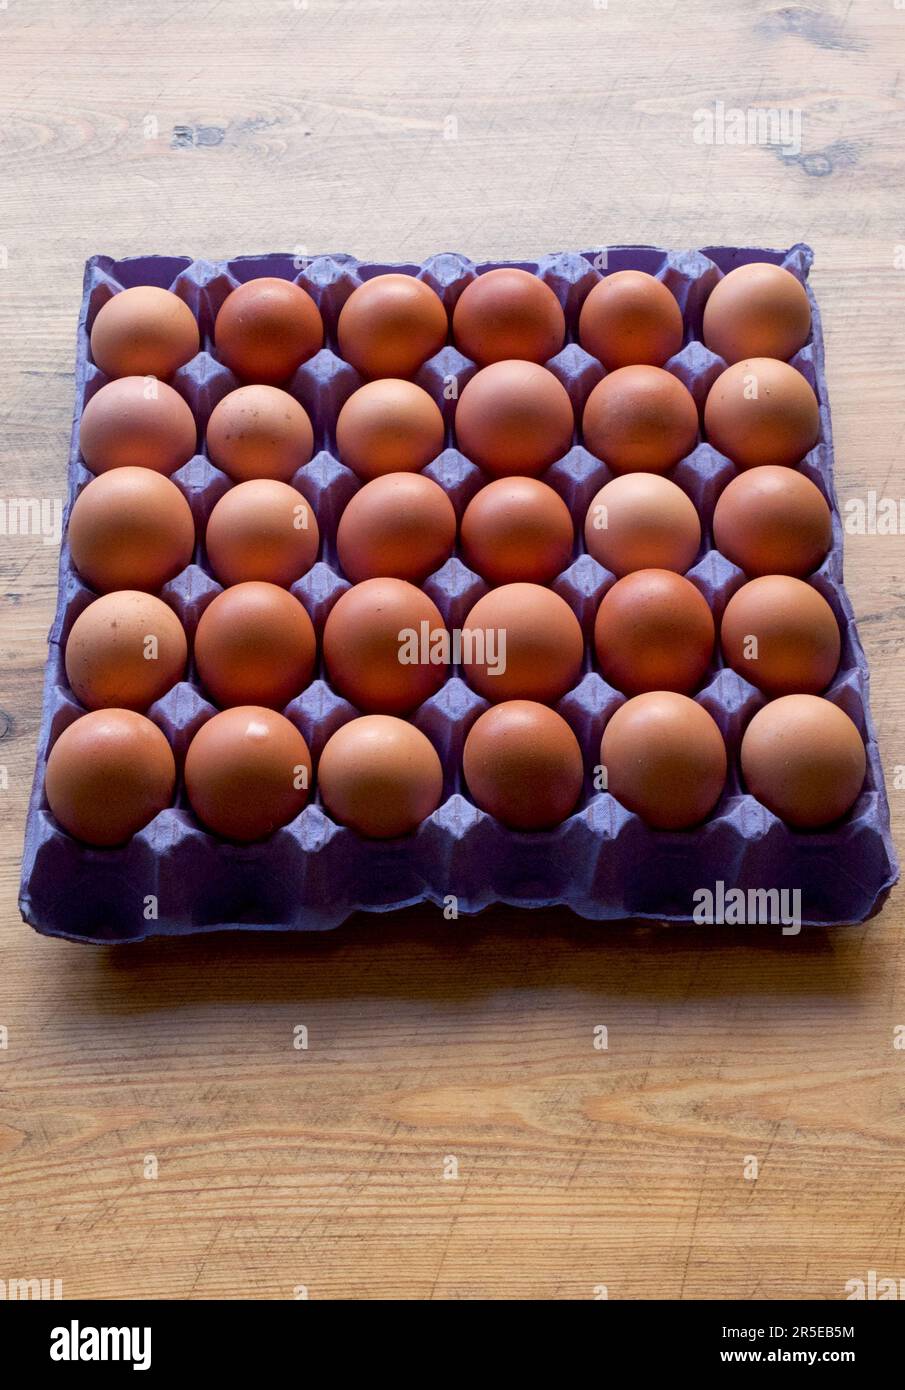 30 uova di gallina in un vassoio di cartone blu Foto Stock